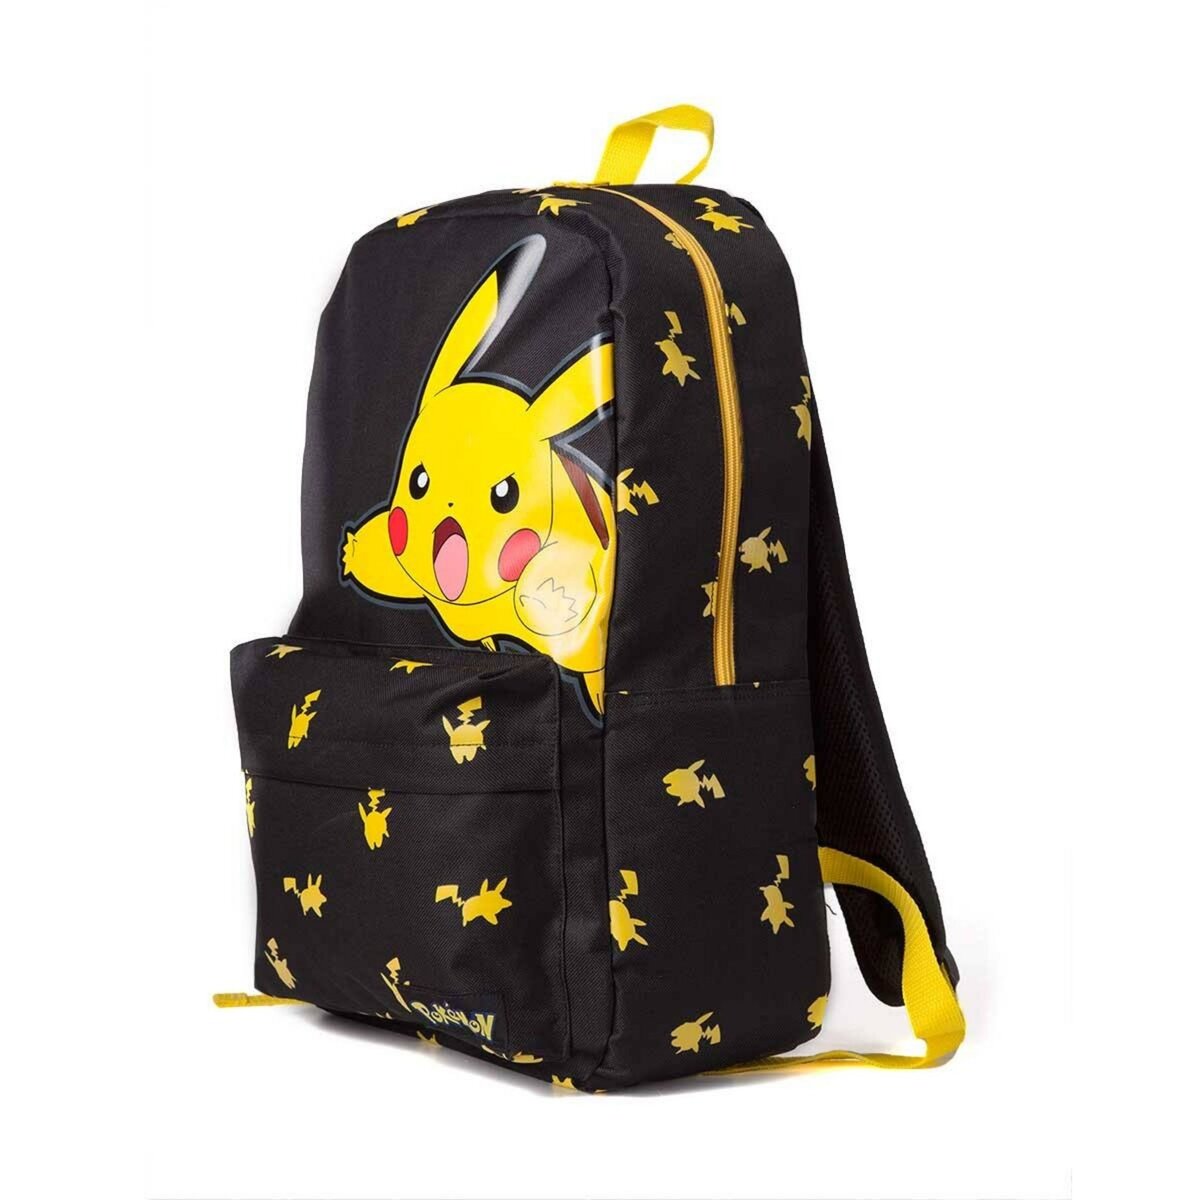 Sac à dos Pokemon - Pikachu